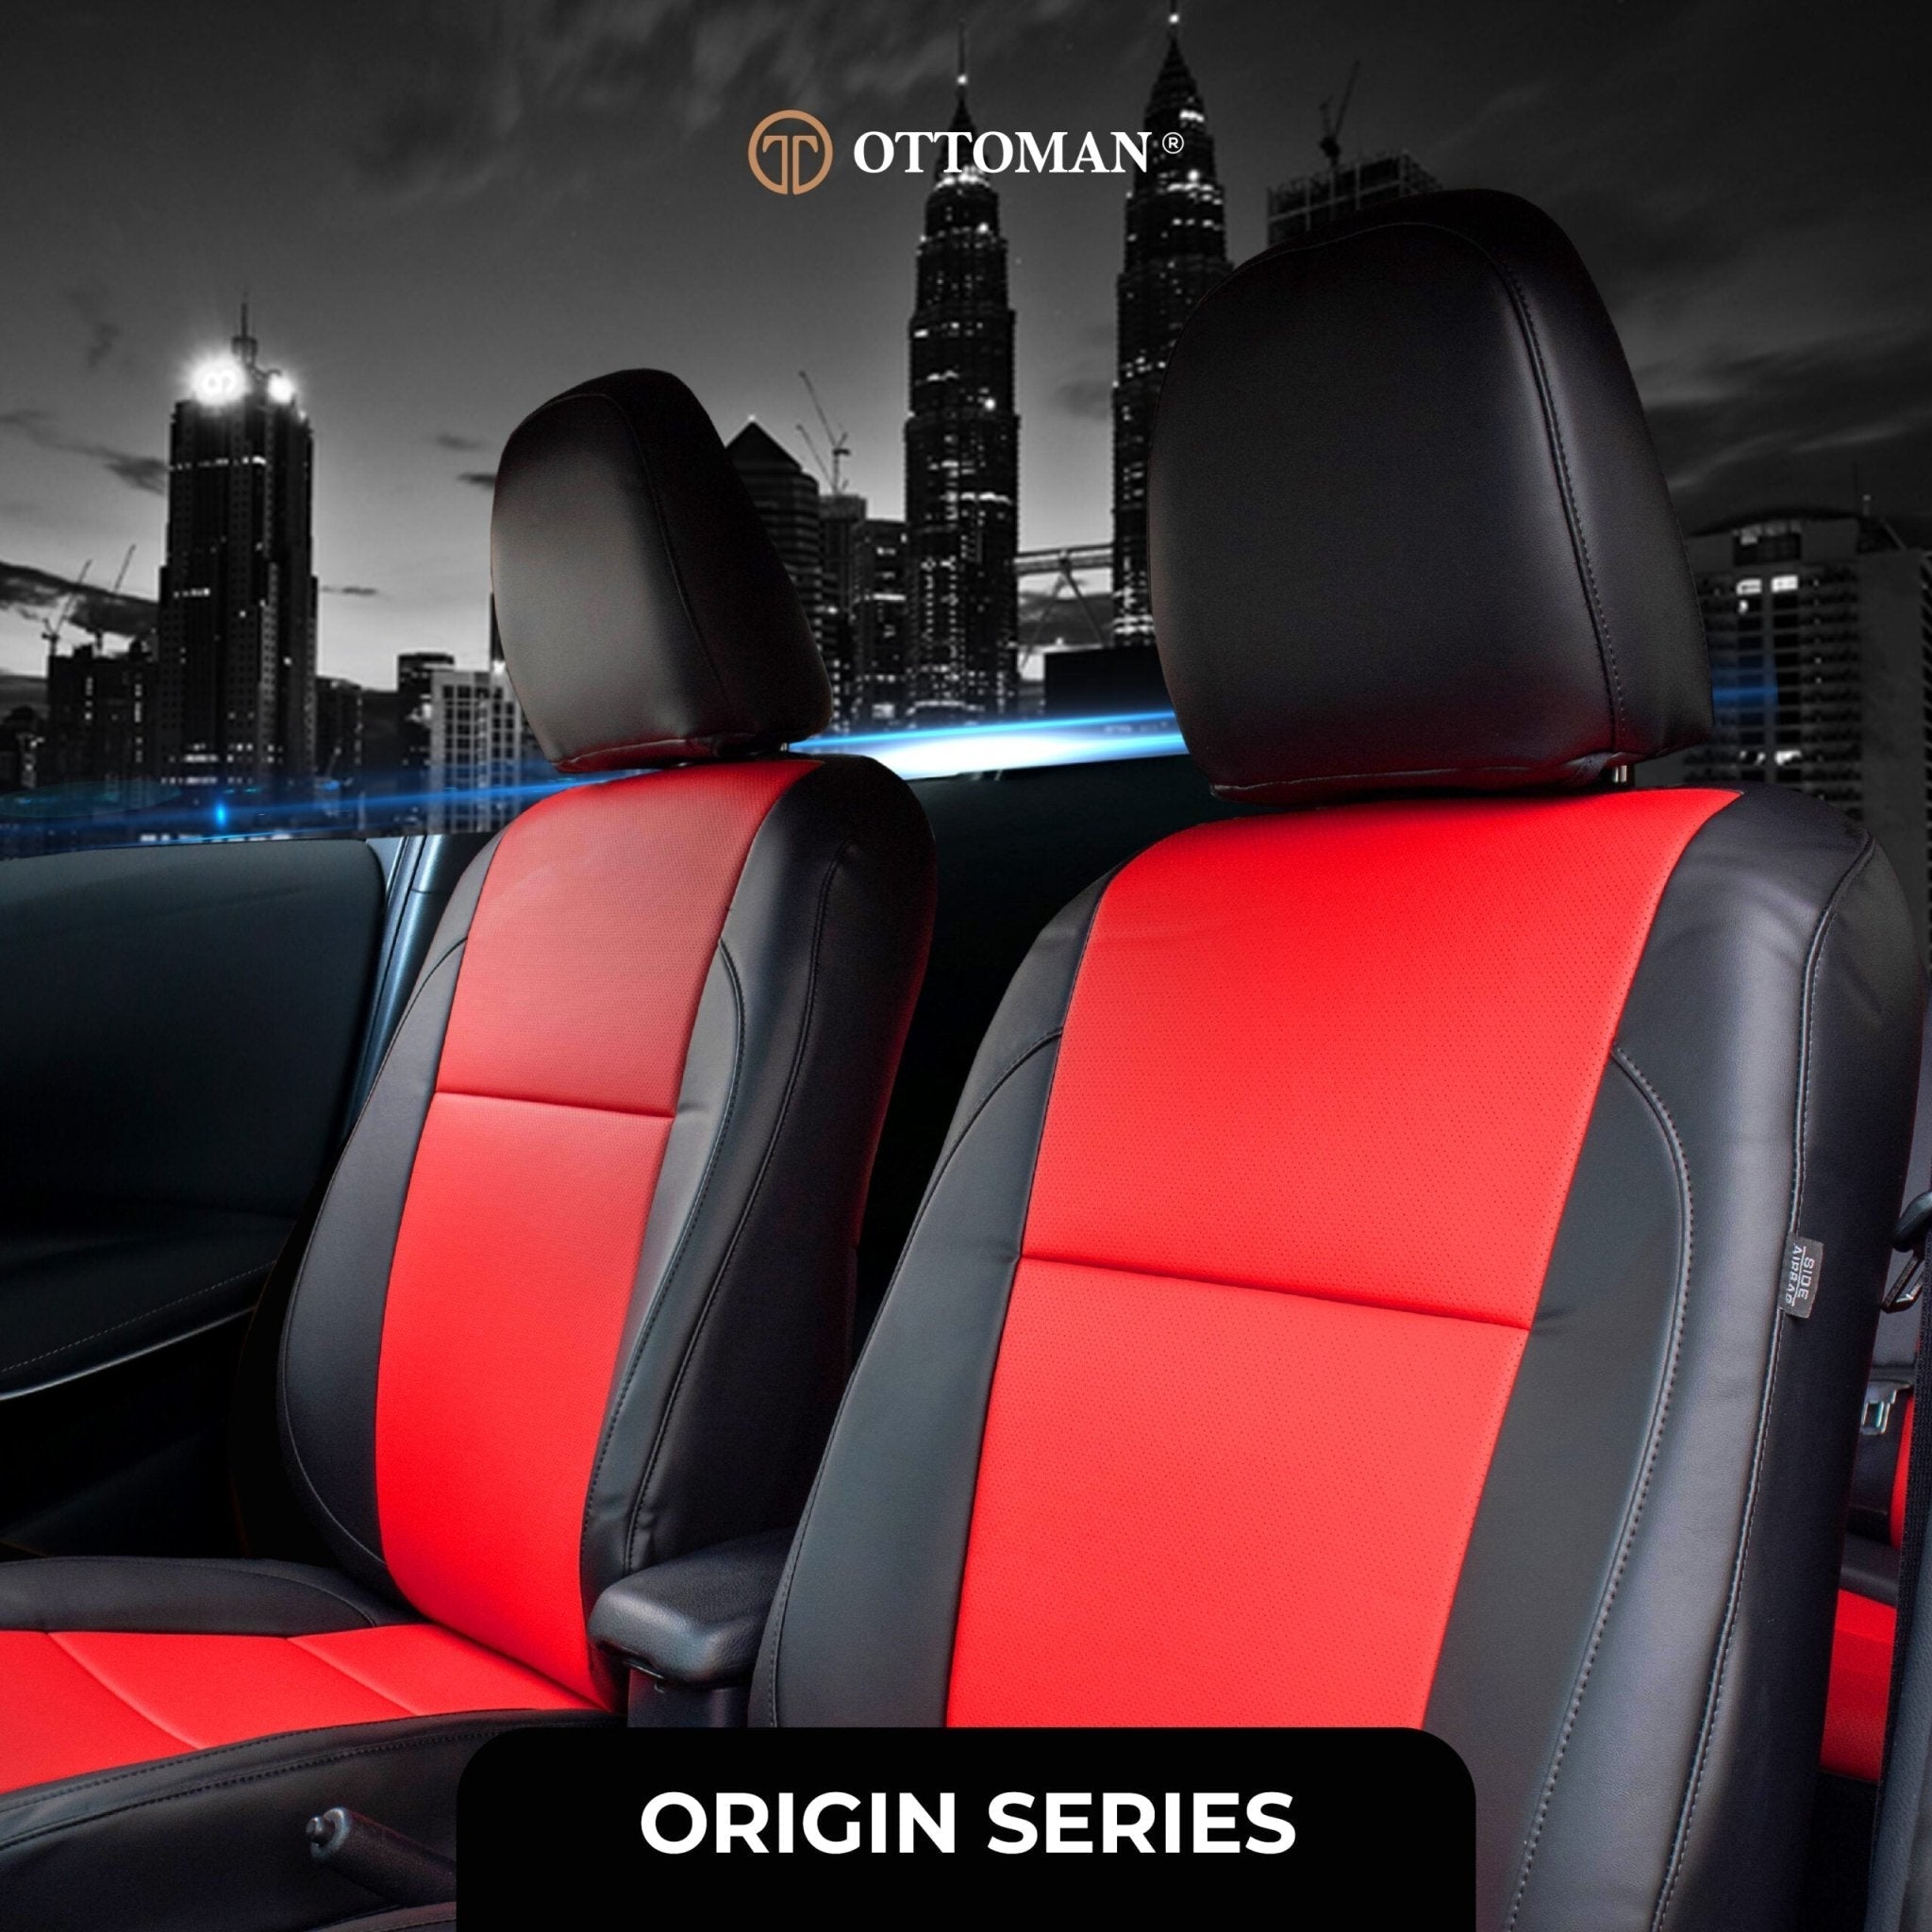 Proton X50 (2020-Present) Ottoman Seat Cover Seat Cover in Klang Selangor, Penang, Johor Bahru - Ottoman Car Mats